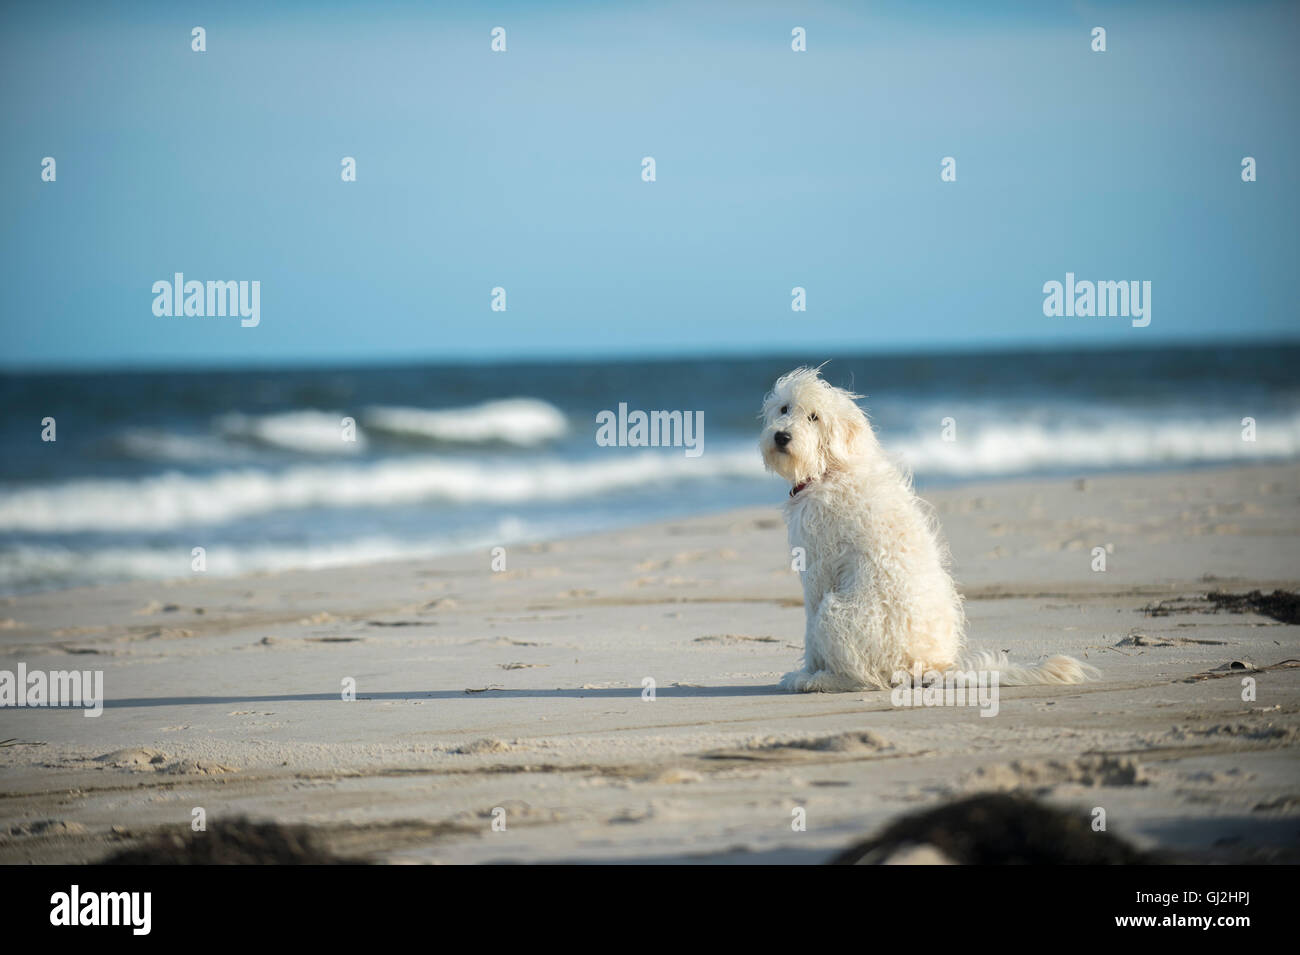 Goldendoodle dog sitting on beach Banque D'Images